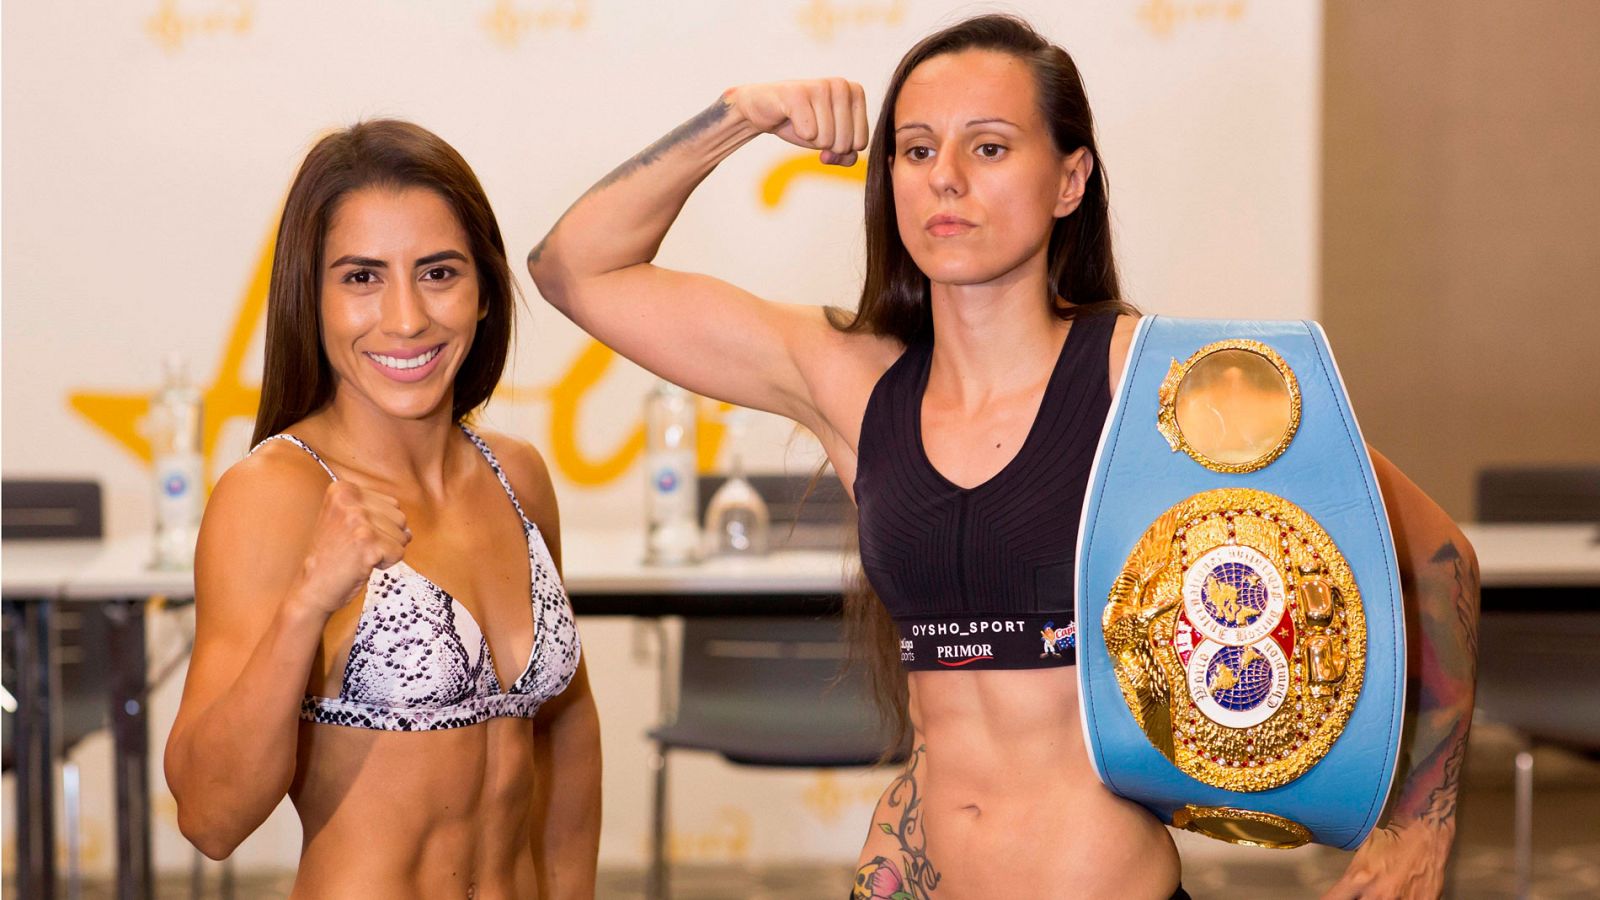 La boxeadora española Joana Pastrana, posa junto la costarricense Yokasta Valle, antes de ser pesadas en la jornada previa al Campeonato Mundial de Boxeo IBF